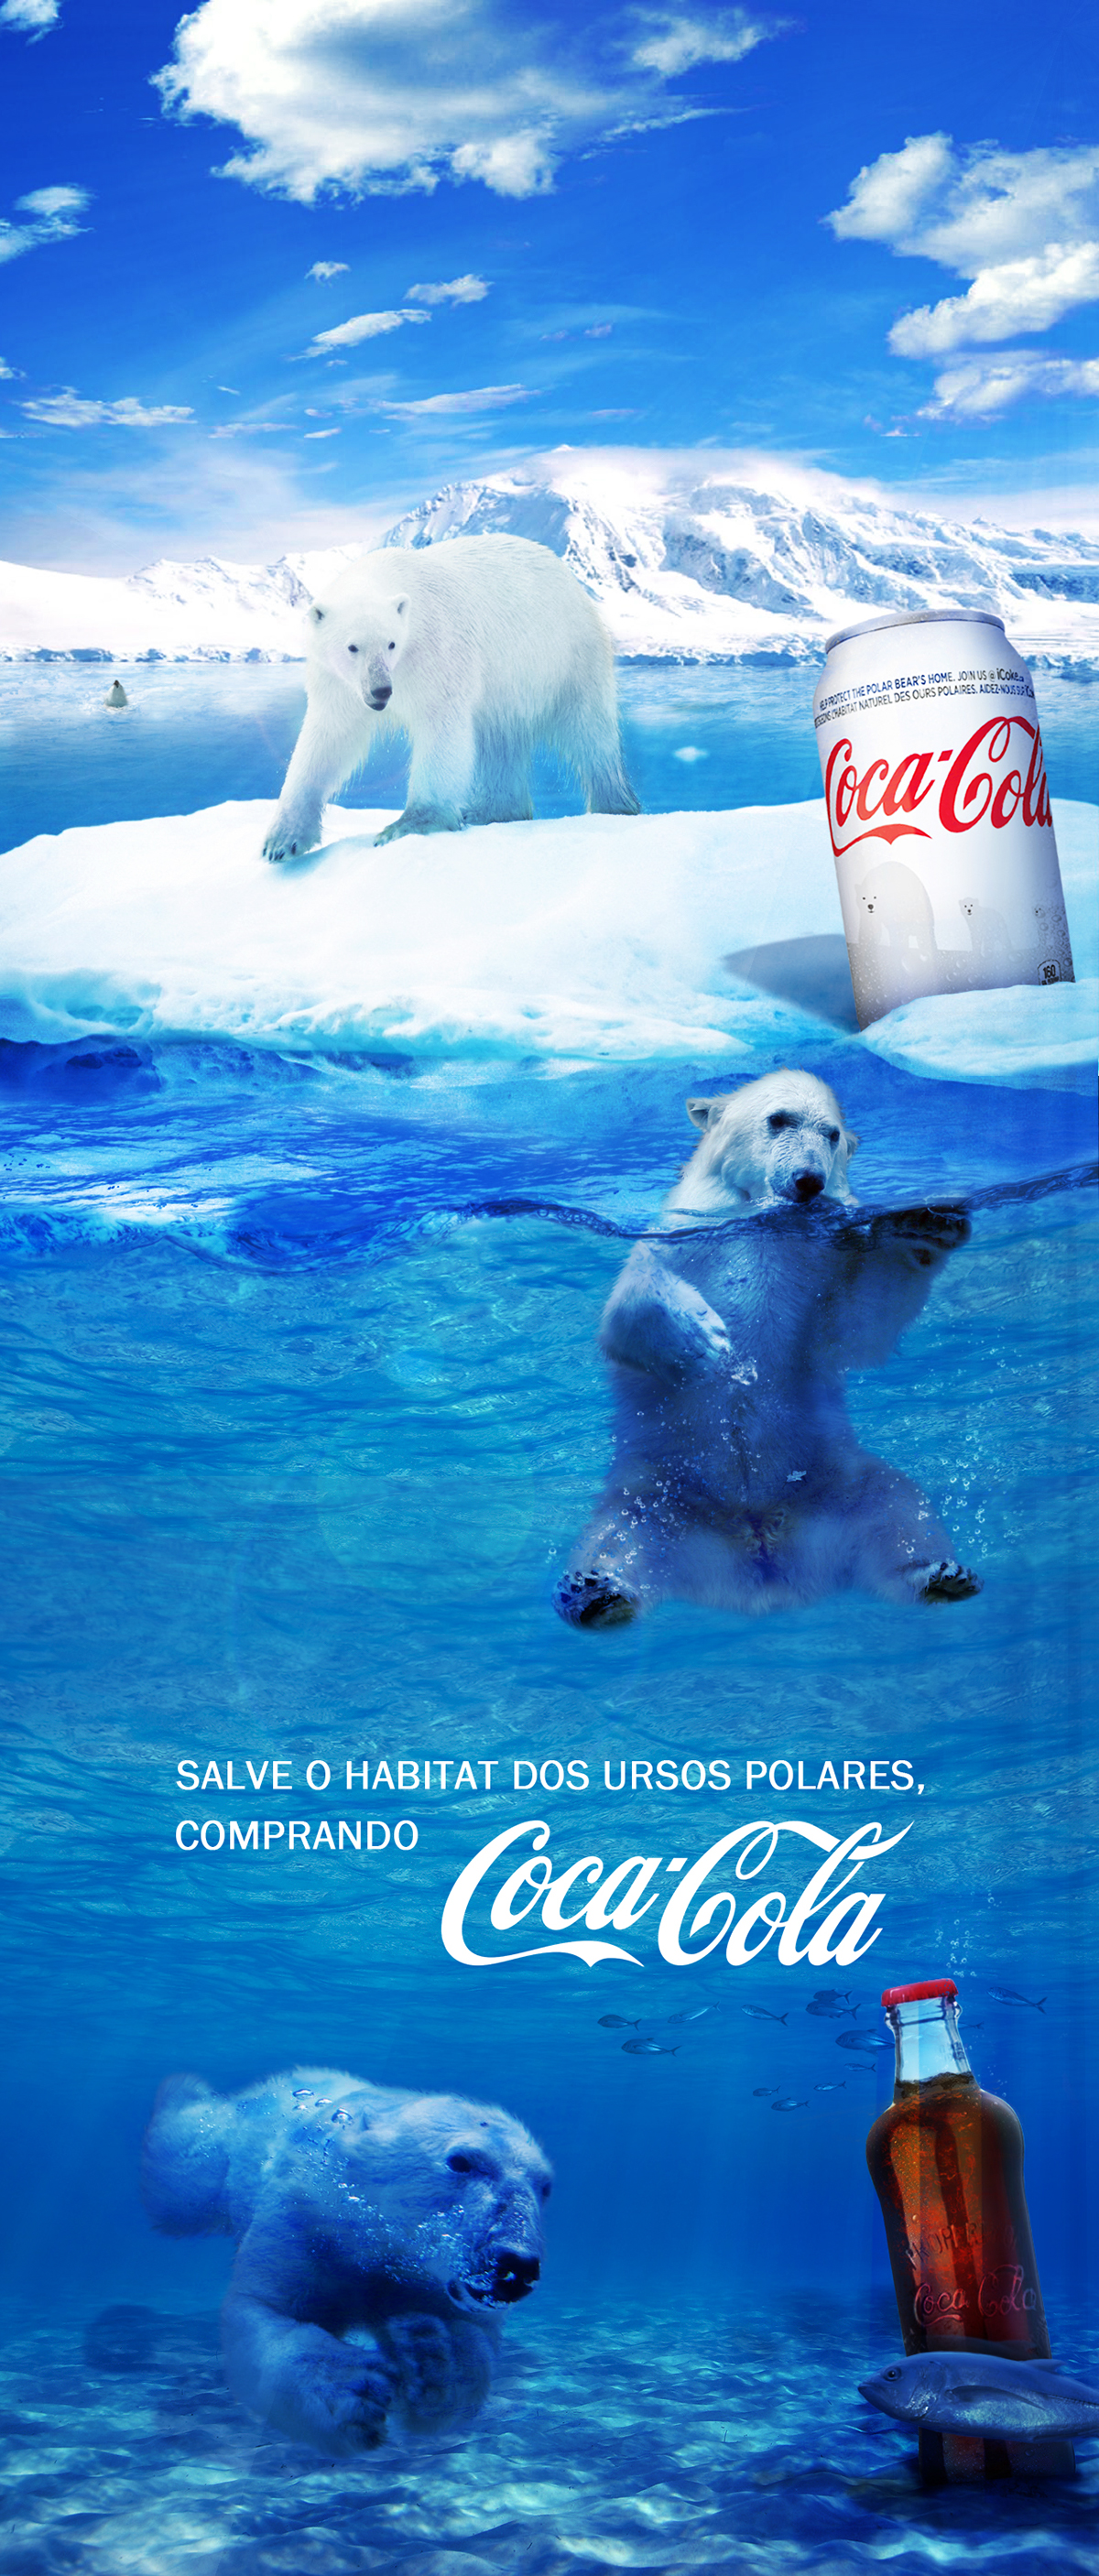 Coca Cola ad billboard byob school Project bears snow water ice blue lemon